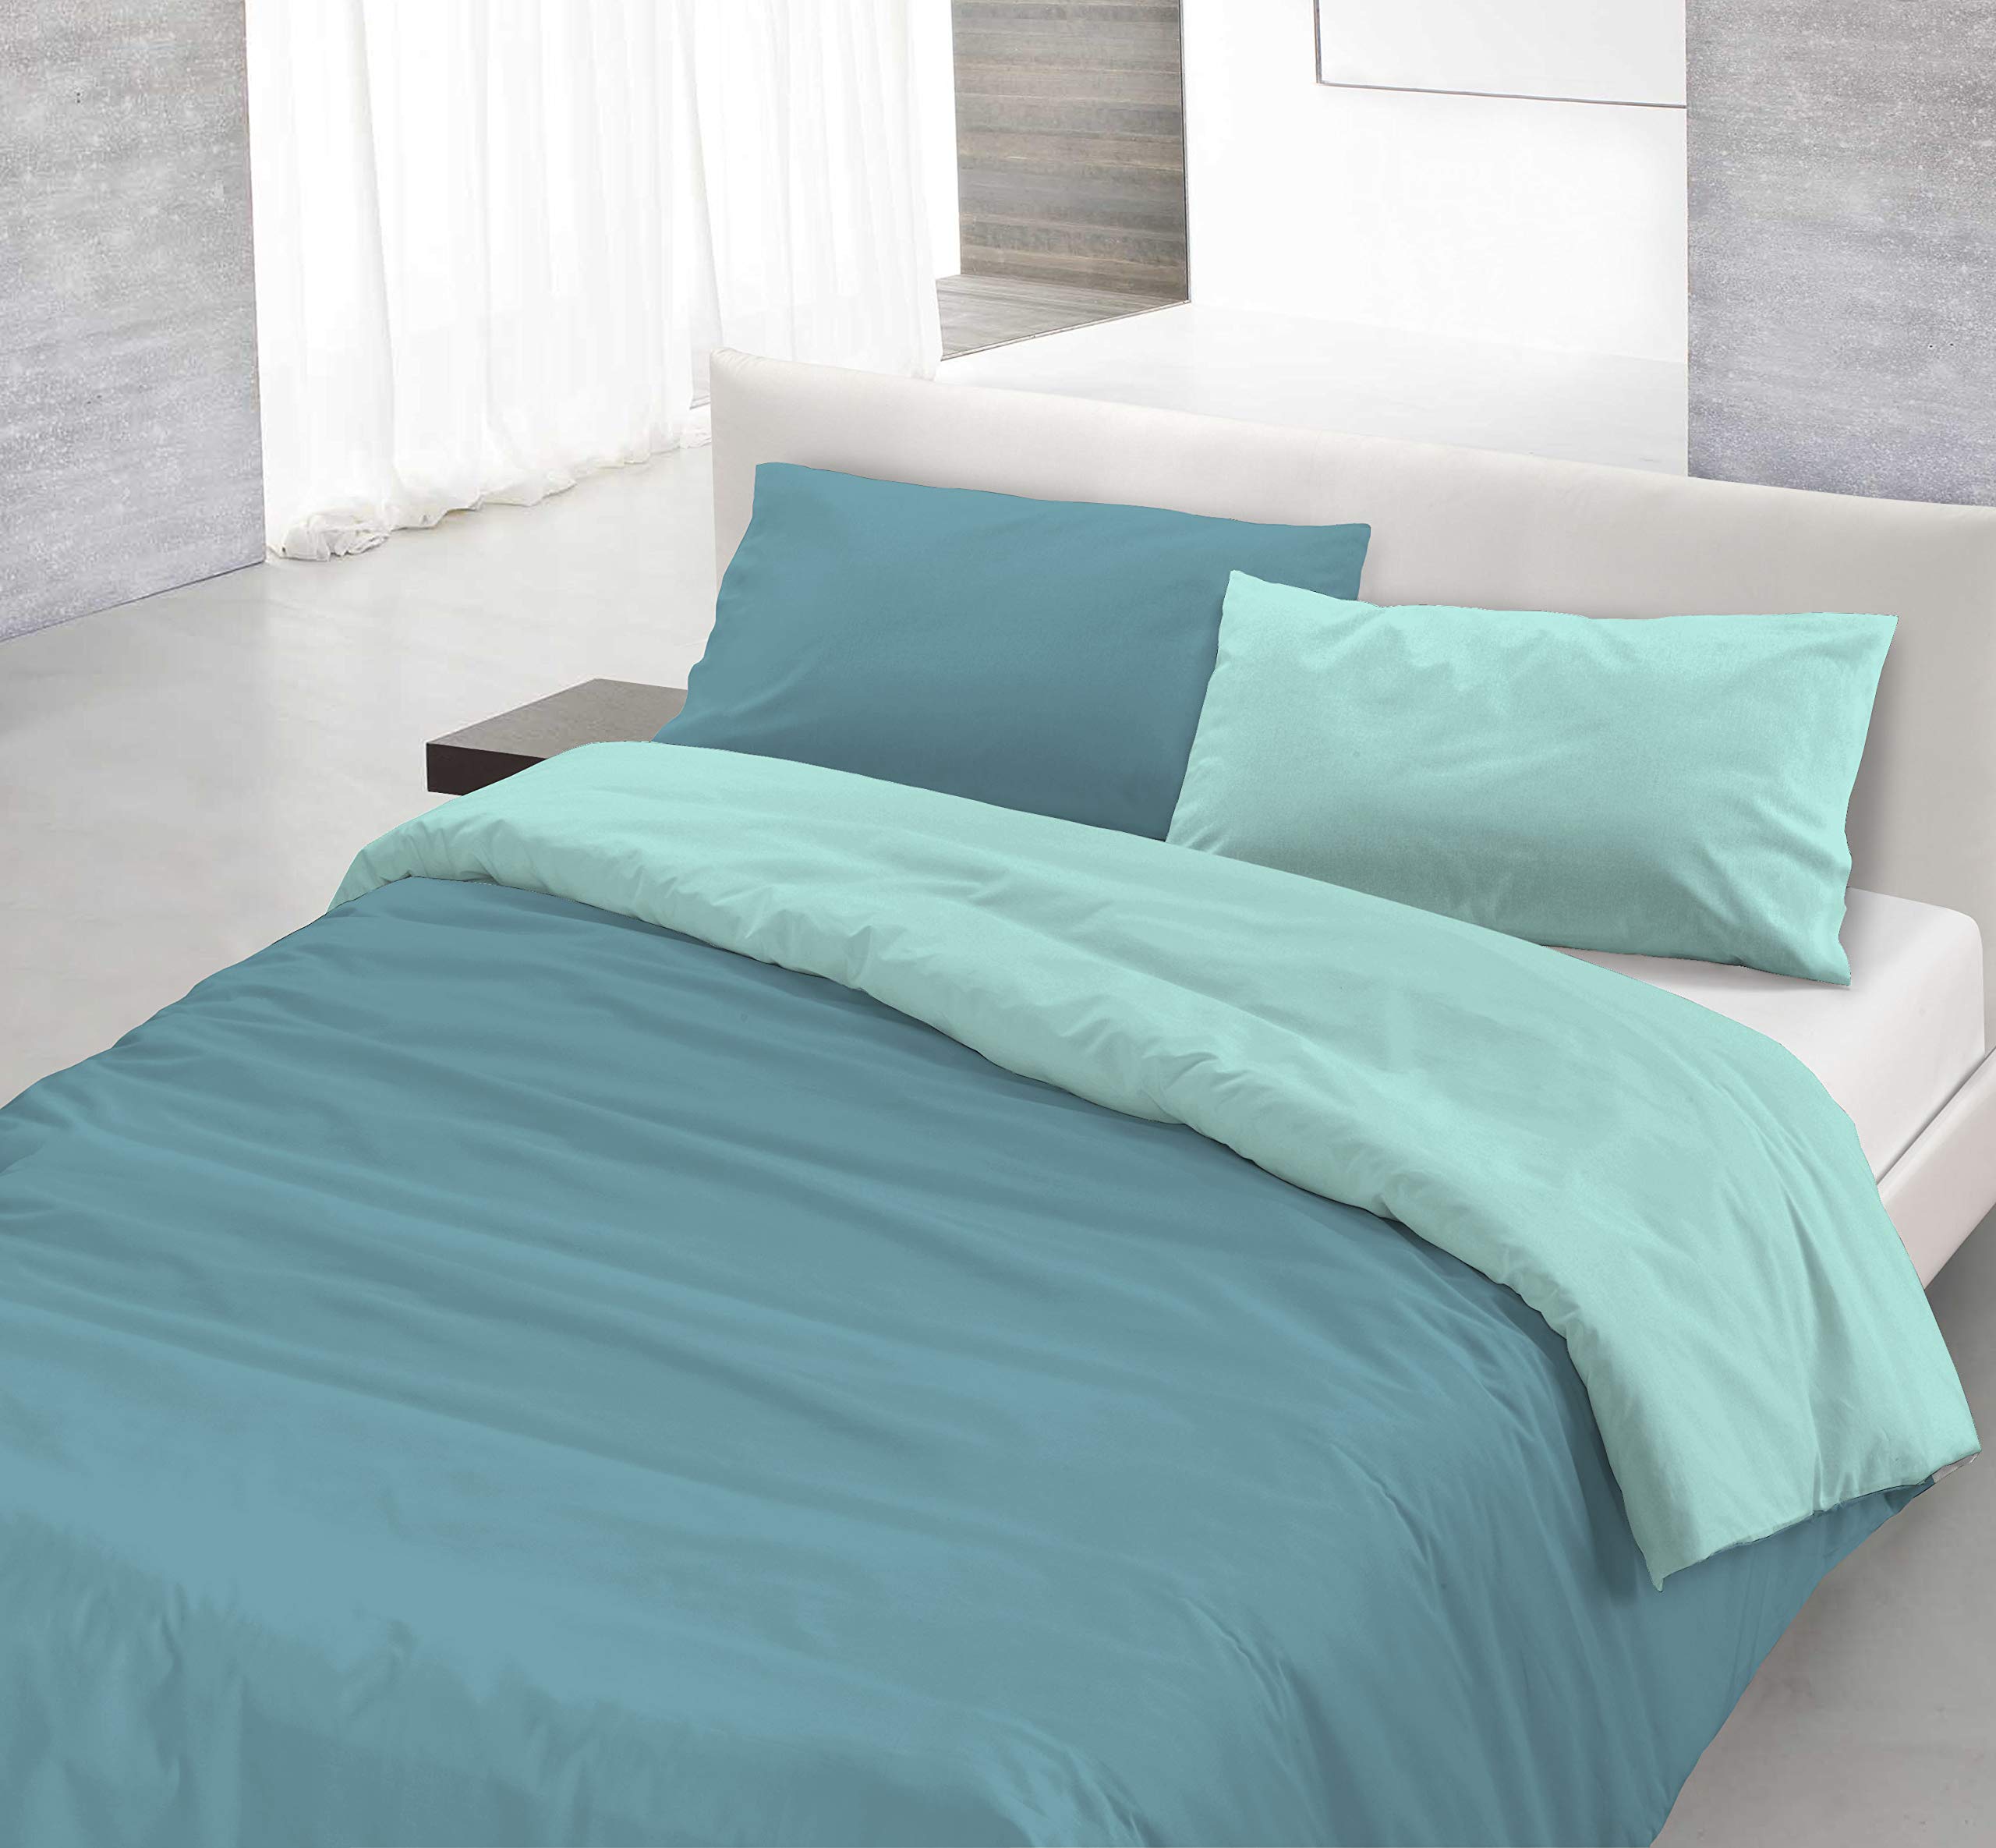 Italian Bed Linen Natural Color Doubleface Bettbezug, 100% Baumwolle, avio/Rauch, Einzelne